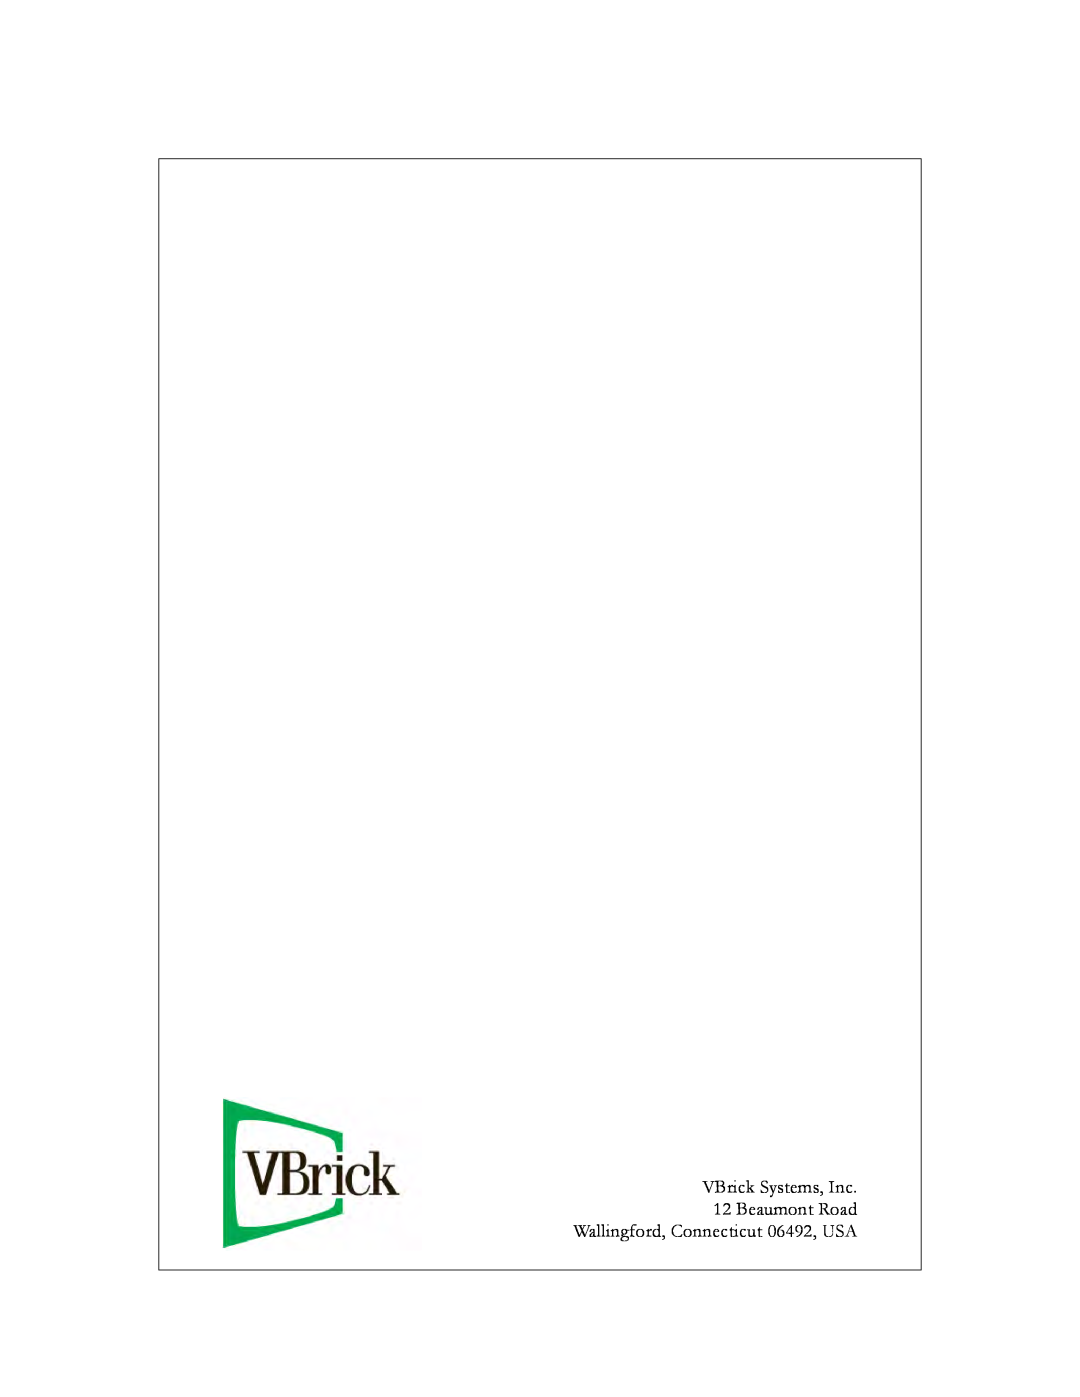 VBrick Systems VB6000, VB4000, VB5000 manual VBrick Systems, Inc 12 Beaumont Road, Wallingford, Connecticut 06492, USA 